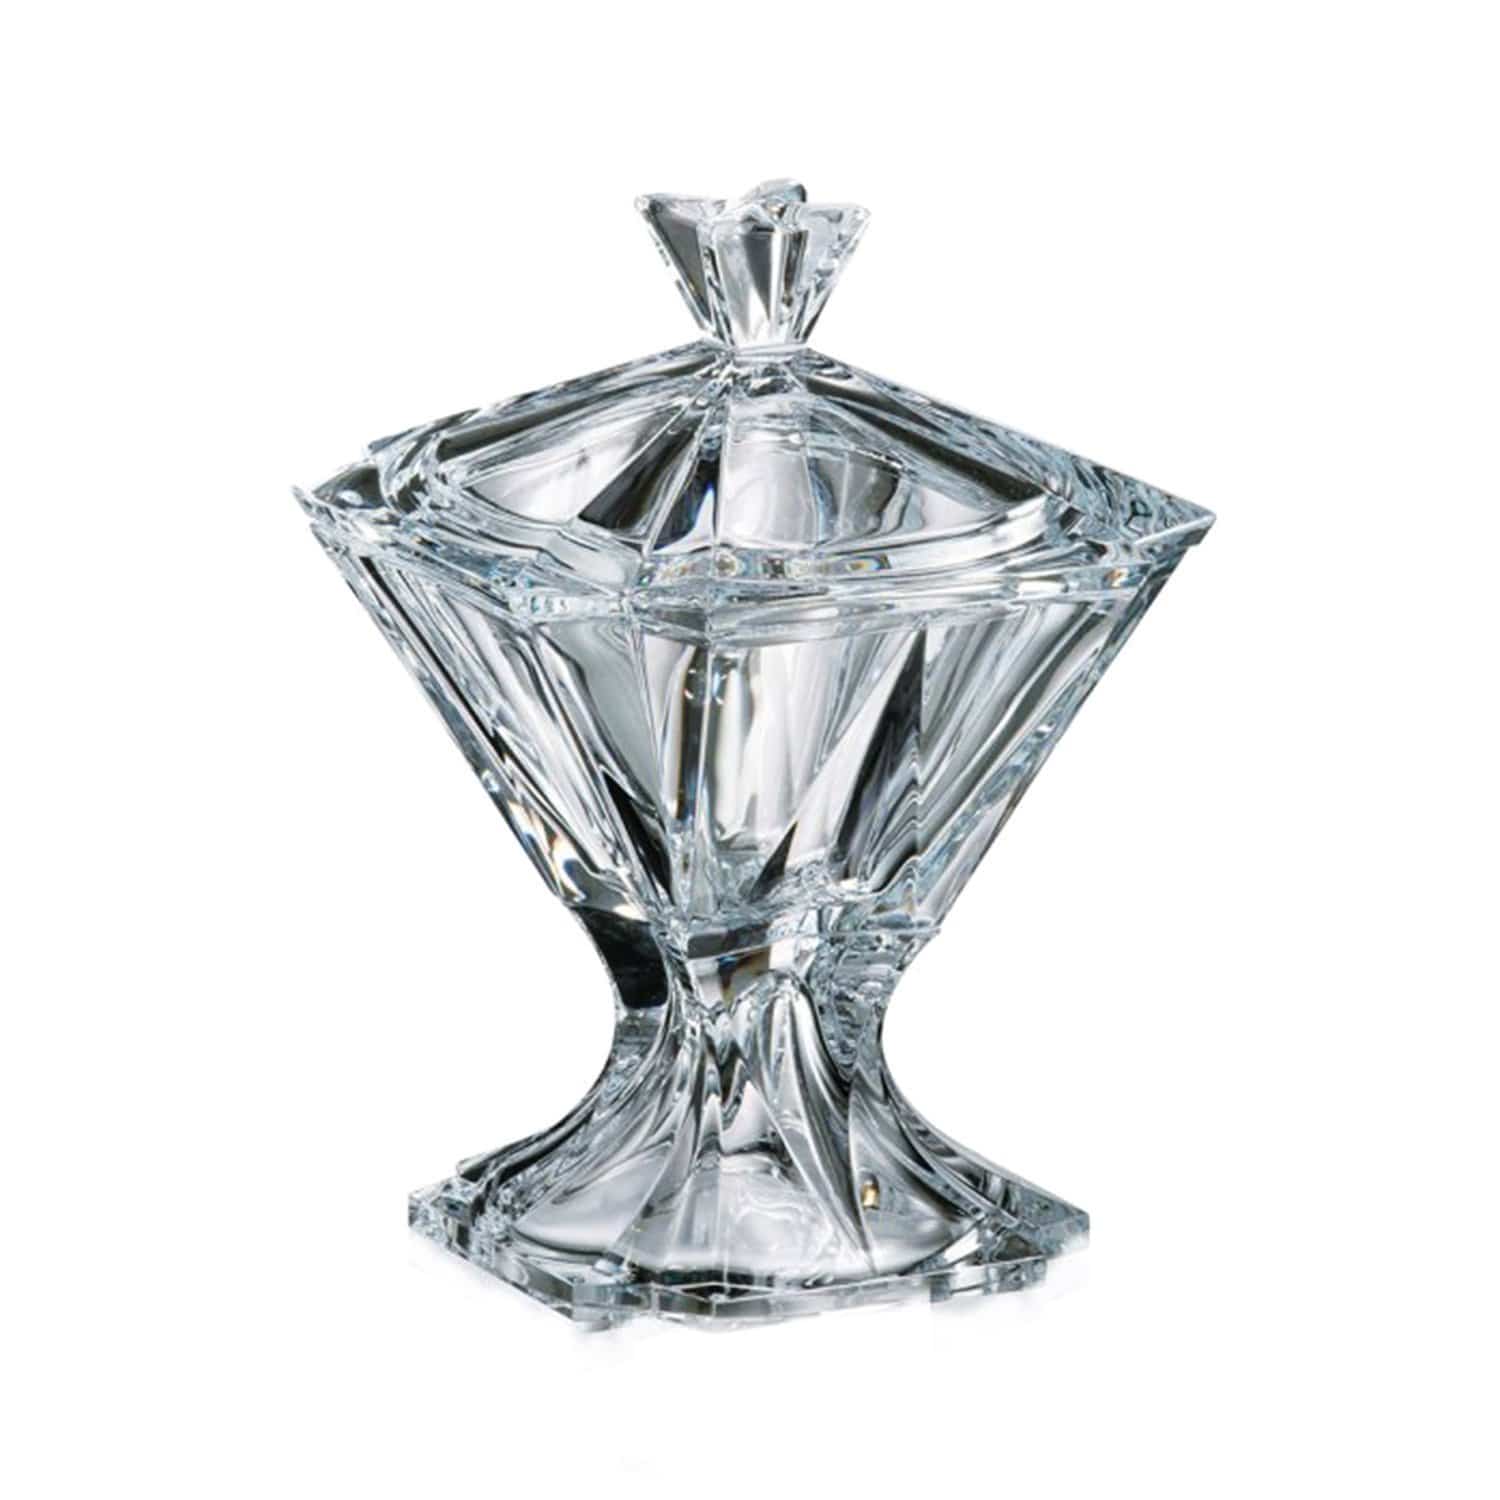 Bohemia Crystal Glass Metropolitan Footed Covered Box - 26 cm - 5390995 - Jashanmal Home